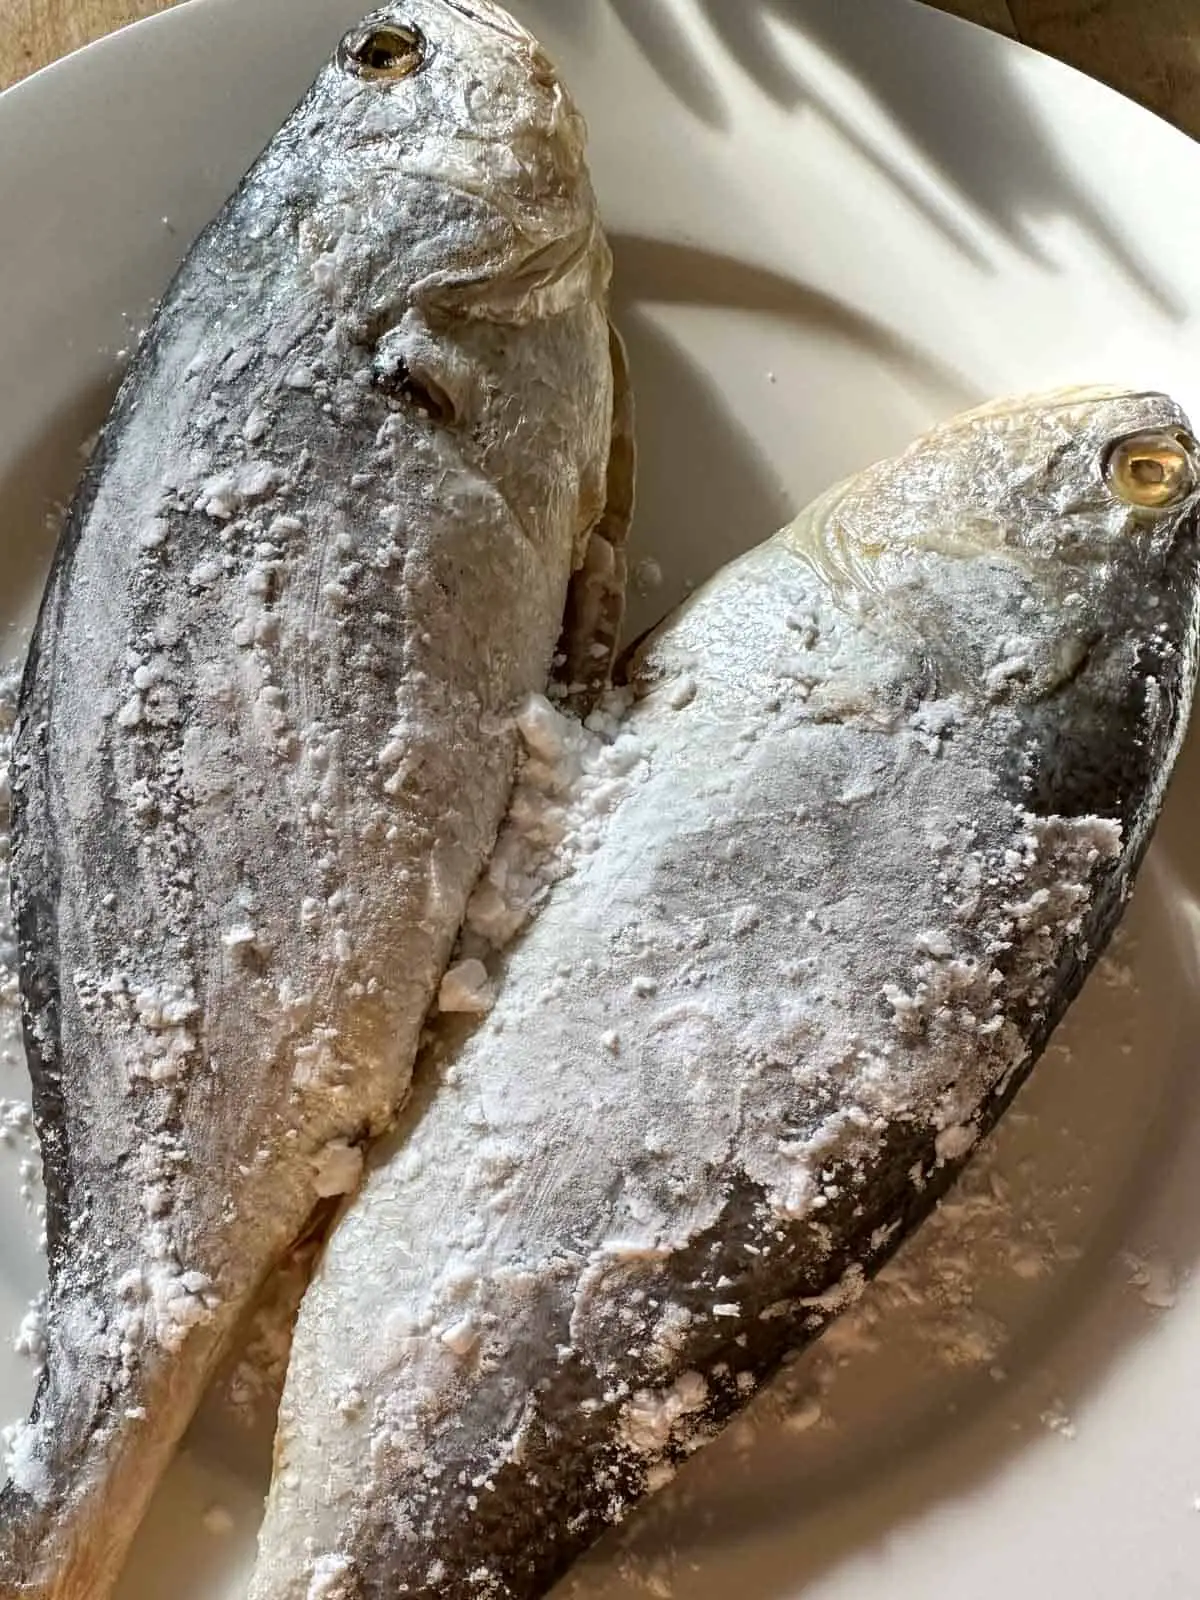 Corvina fish coated in potato starch on a white dish